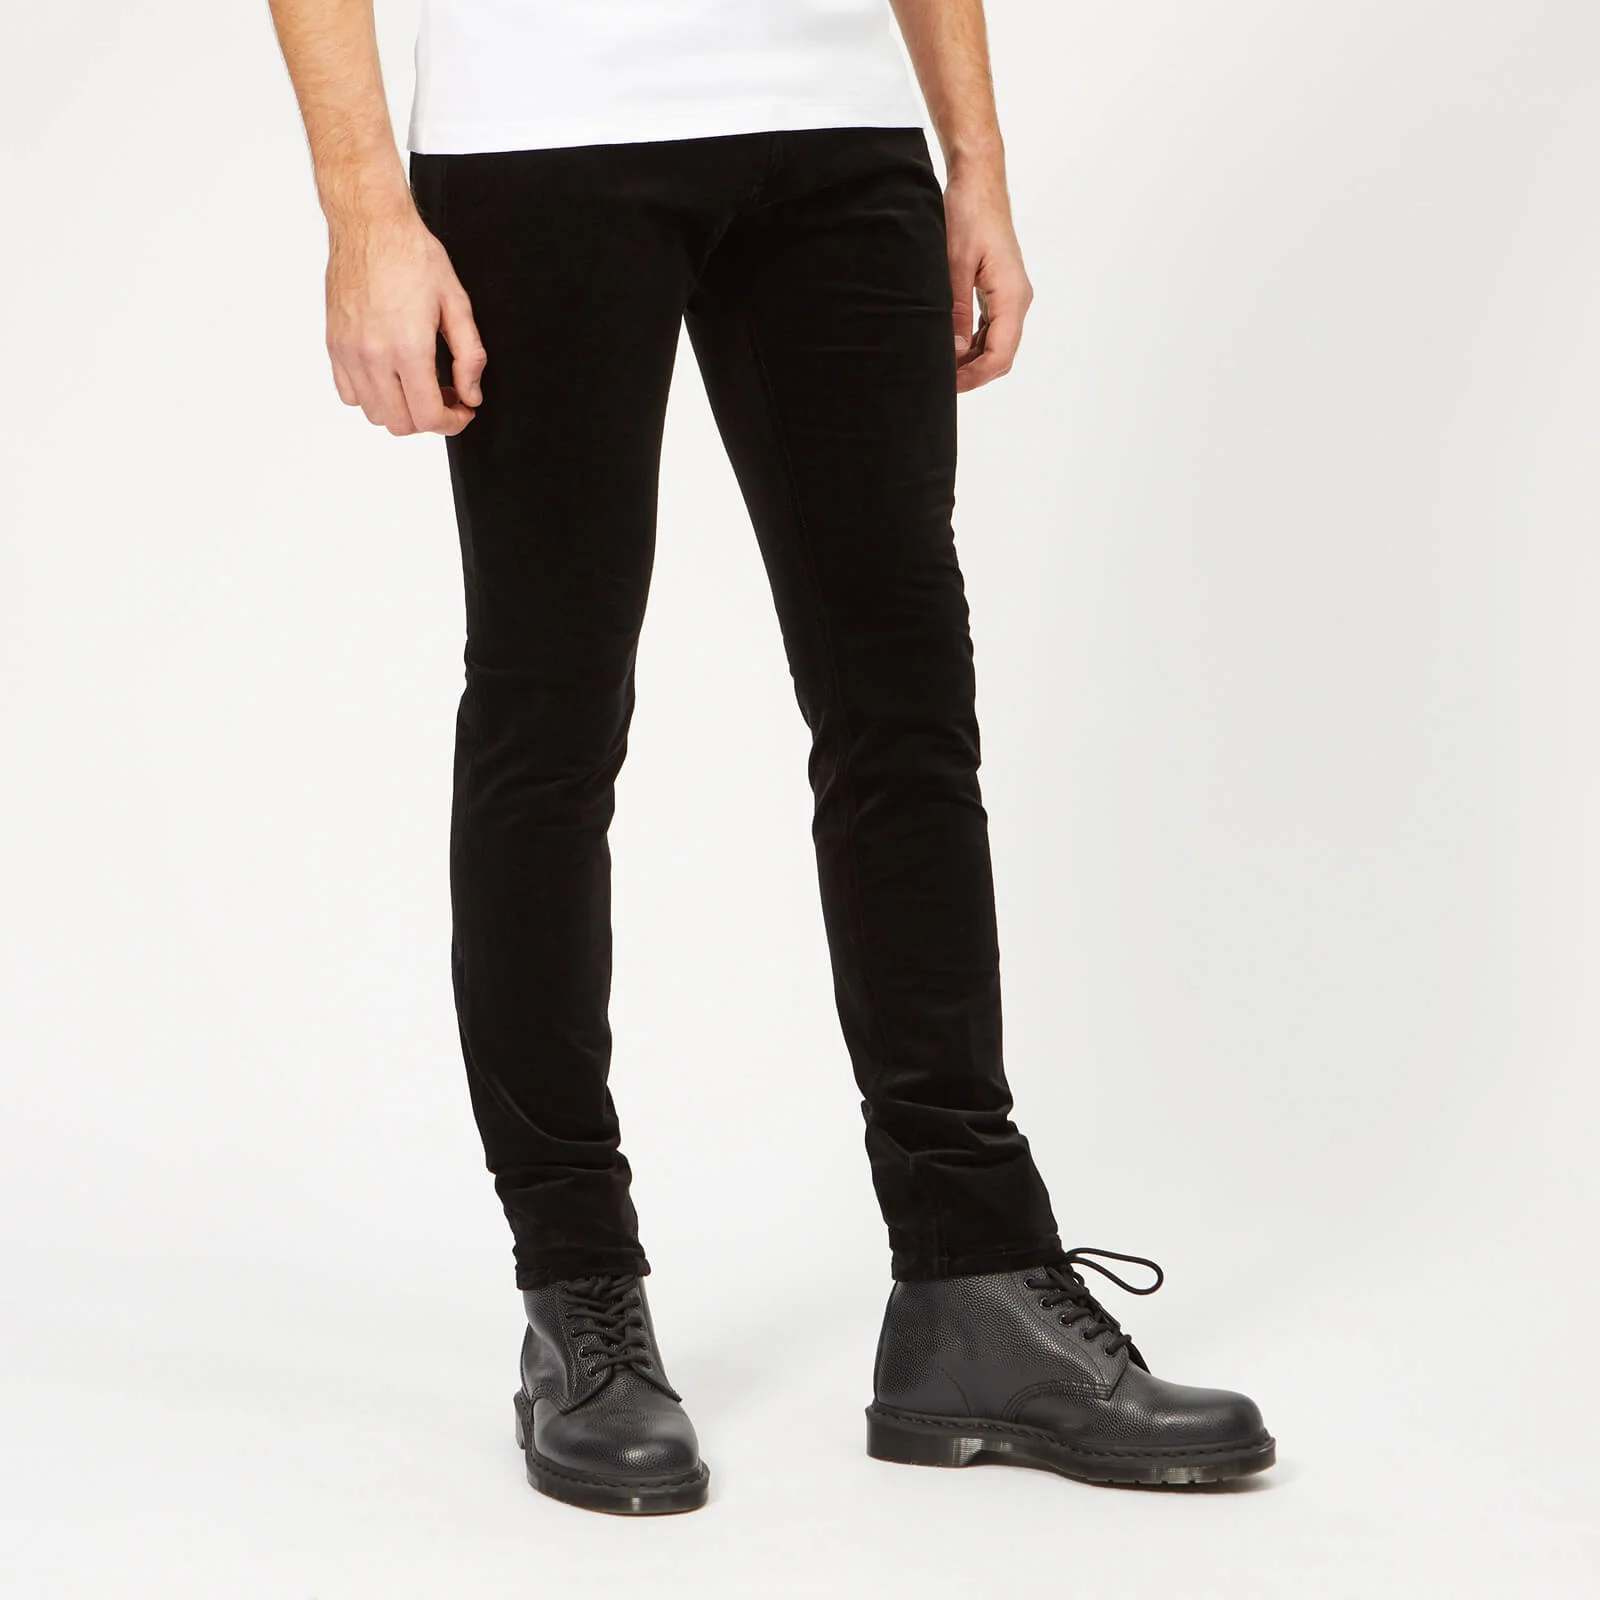 Neil Barrett Men's Skinny Fit Jeans - Black Image 1